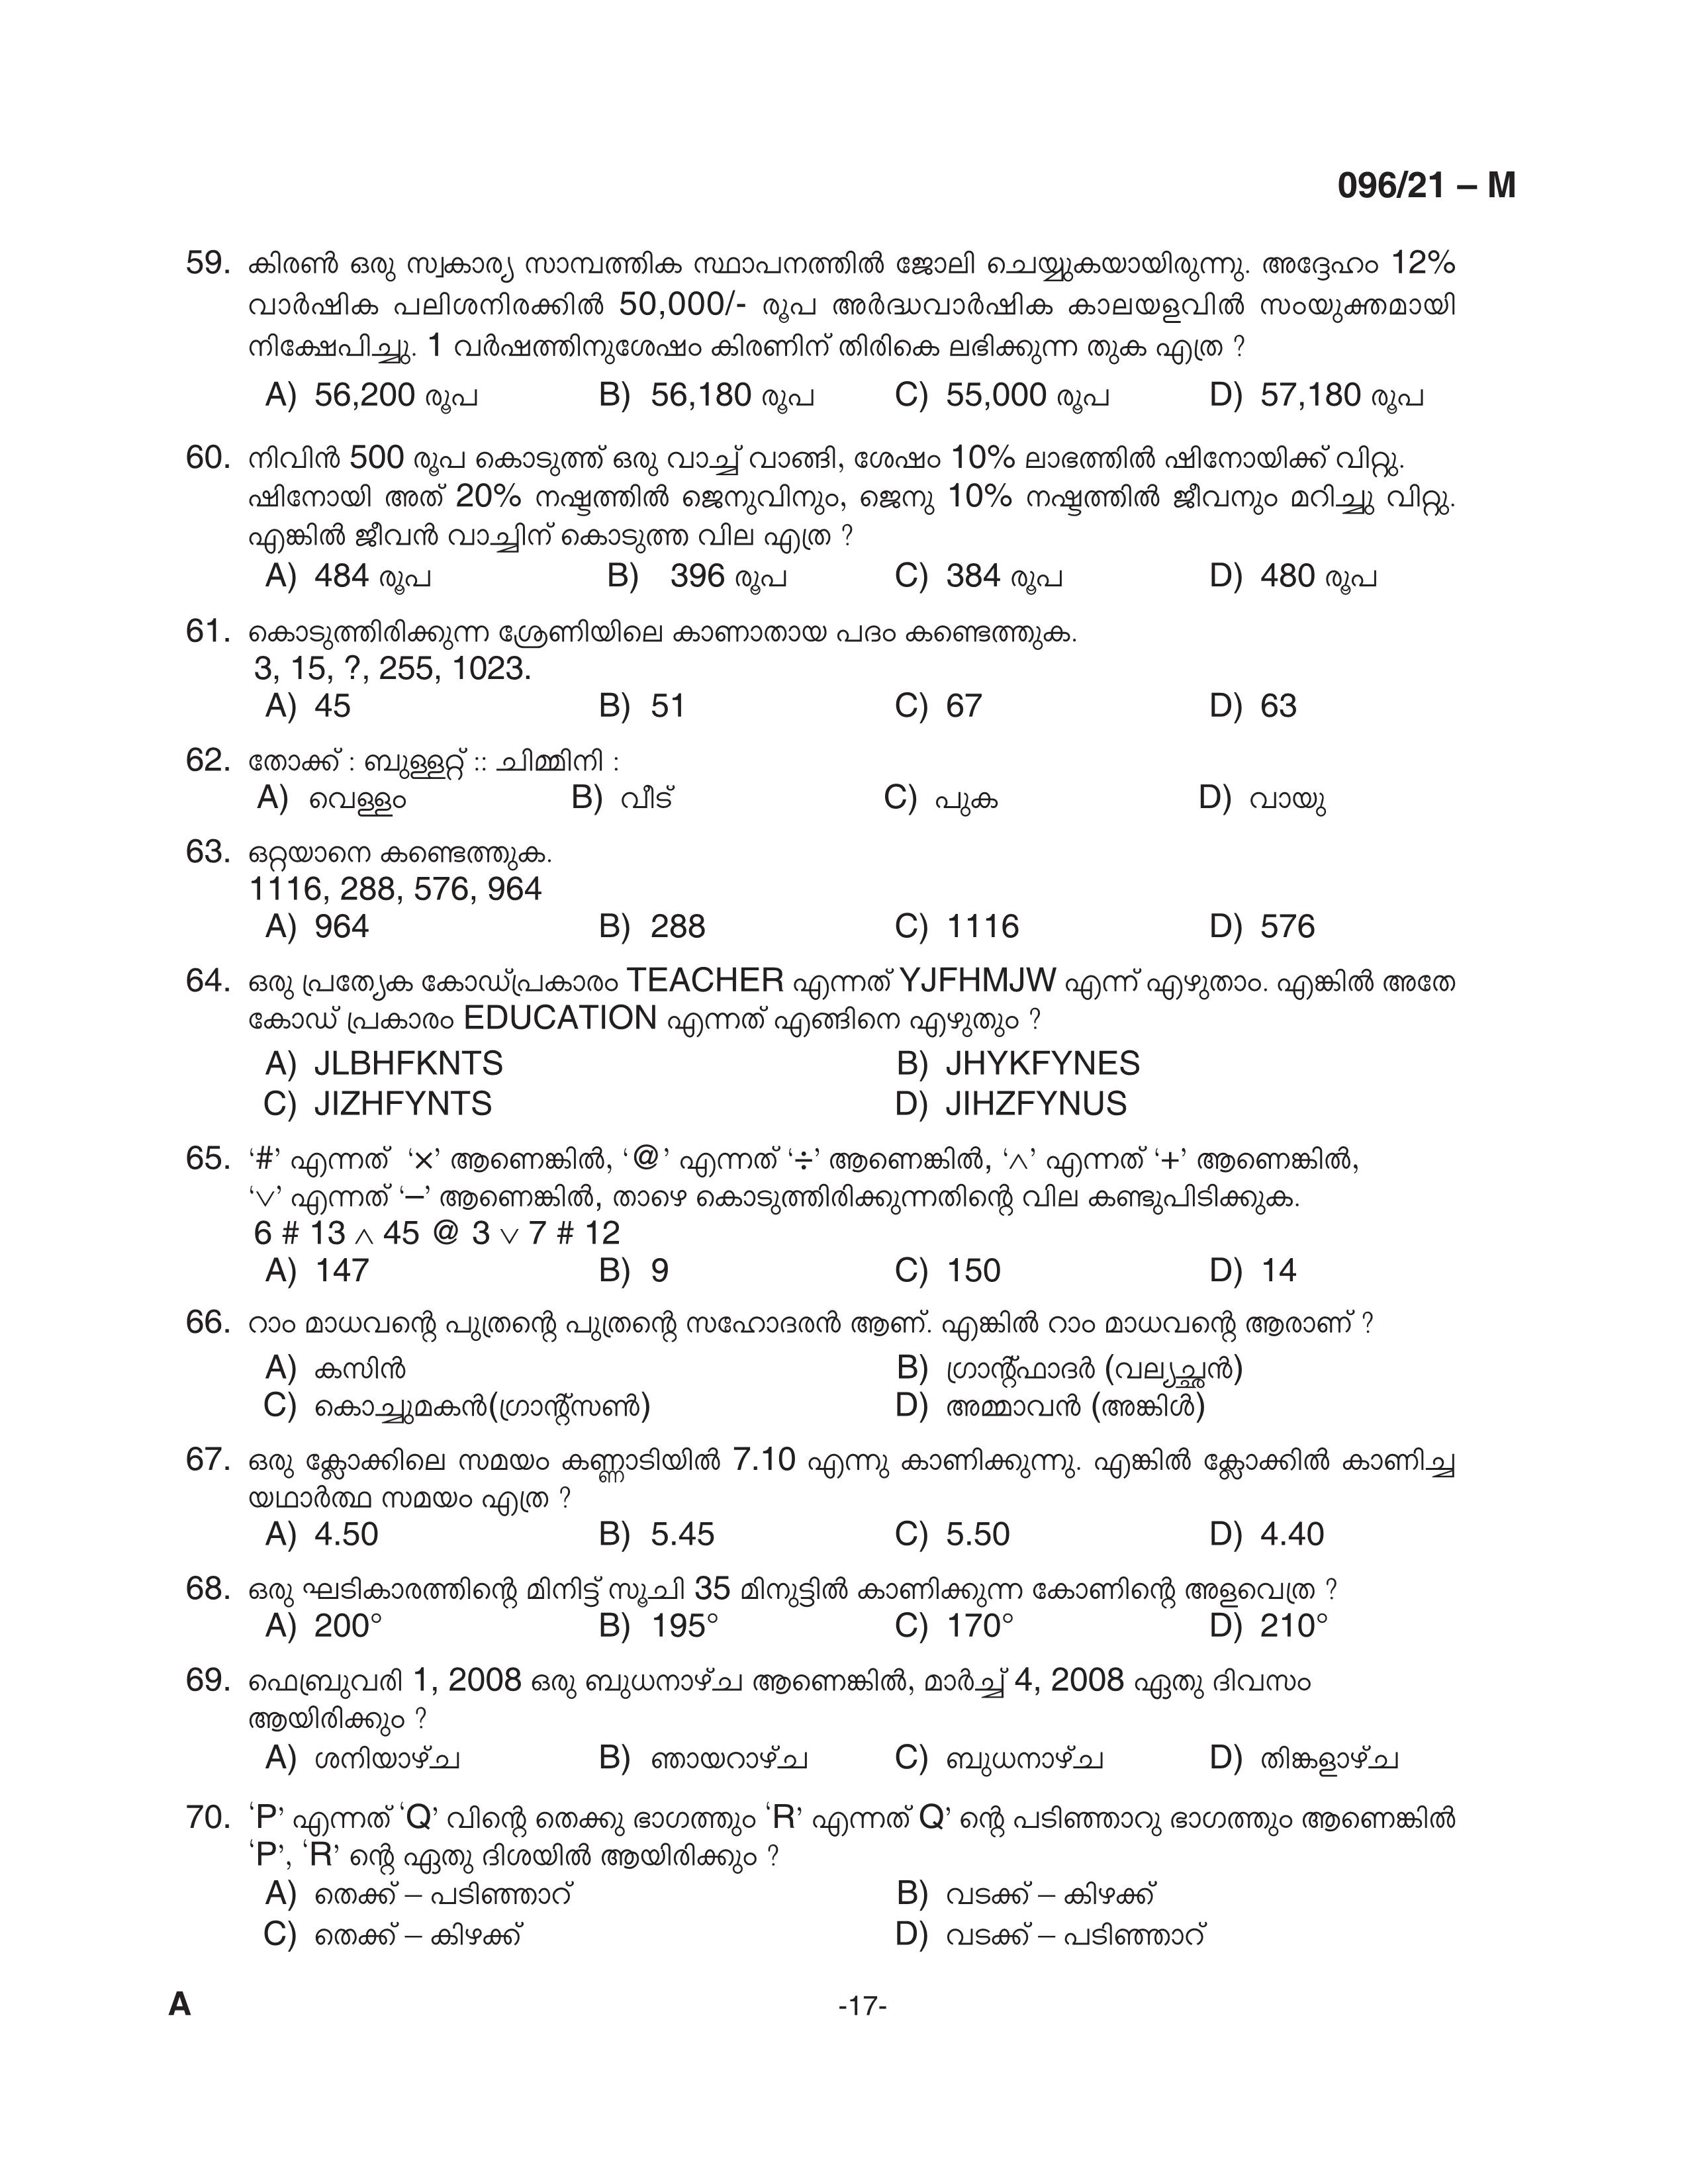 KPSC Degree Level Preliminary Exam Stage II Malayalam 2021 Code 09621 M 17